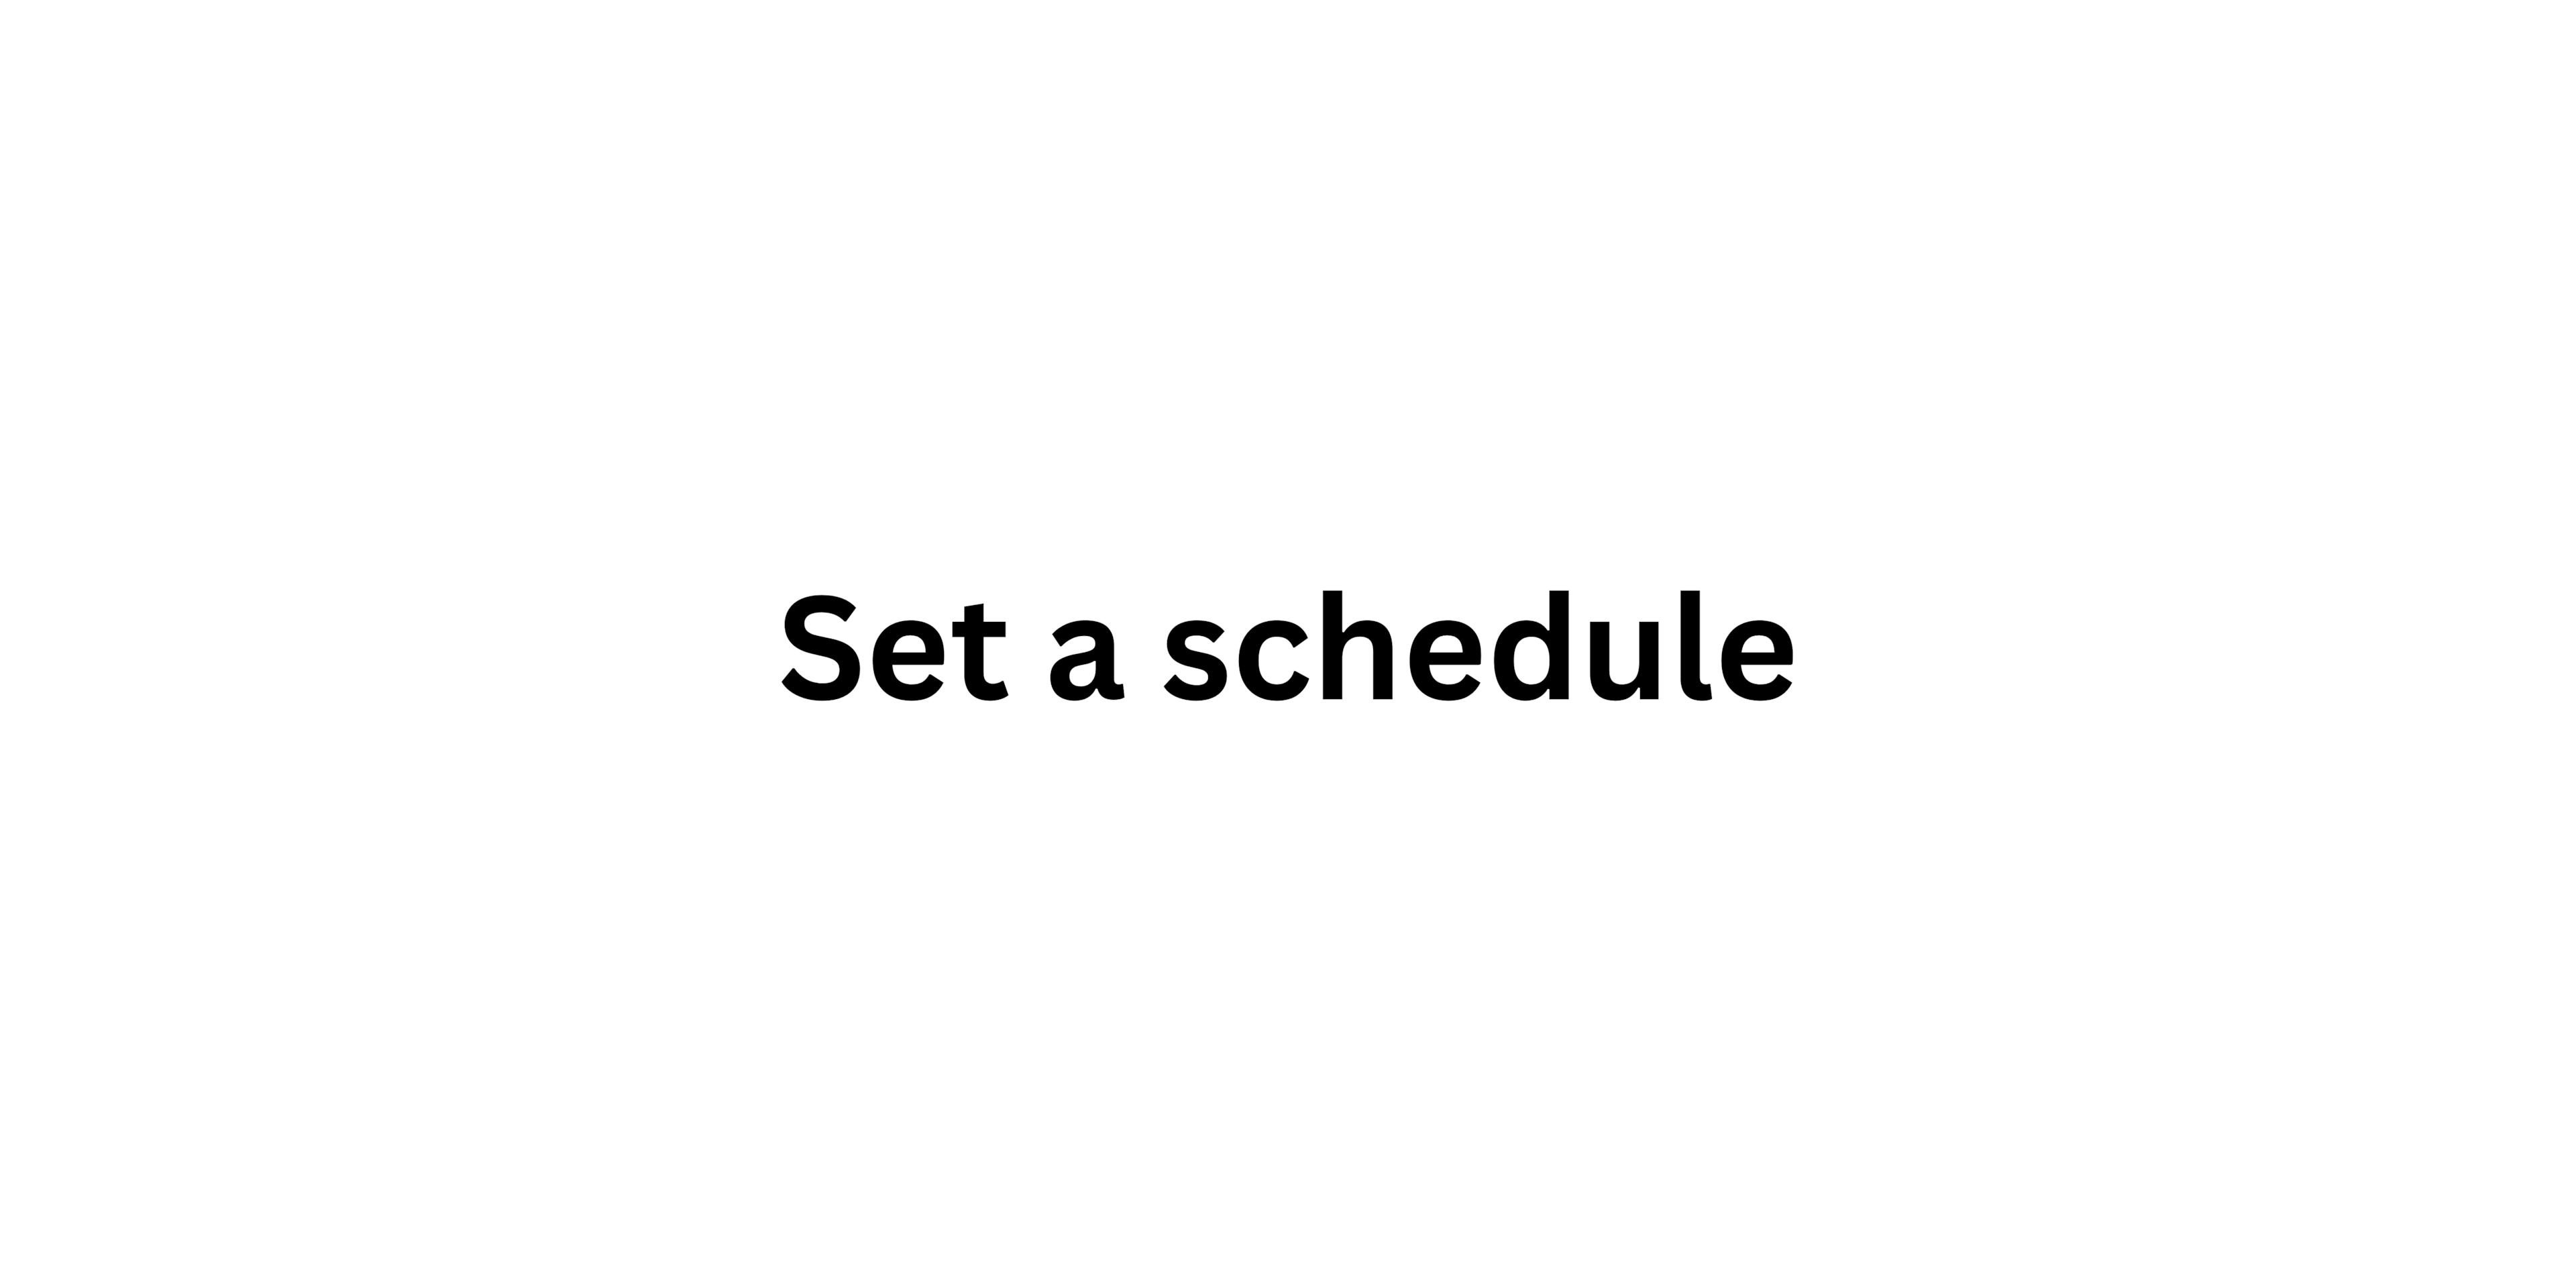 Set a schedule